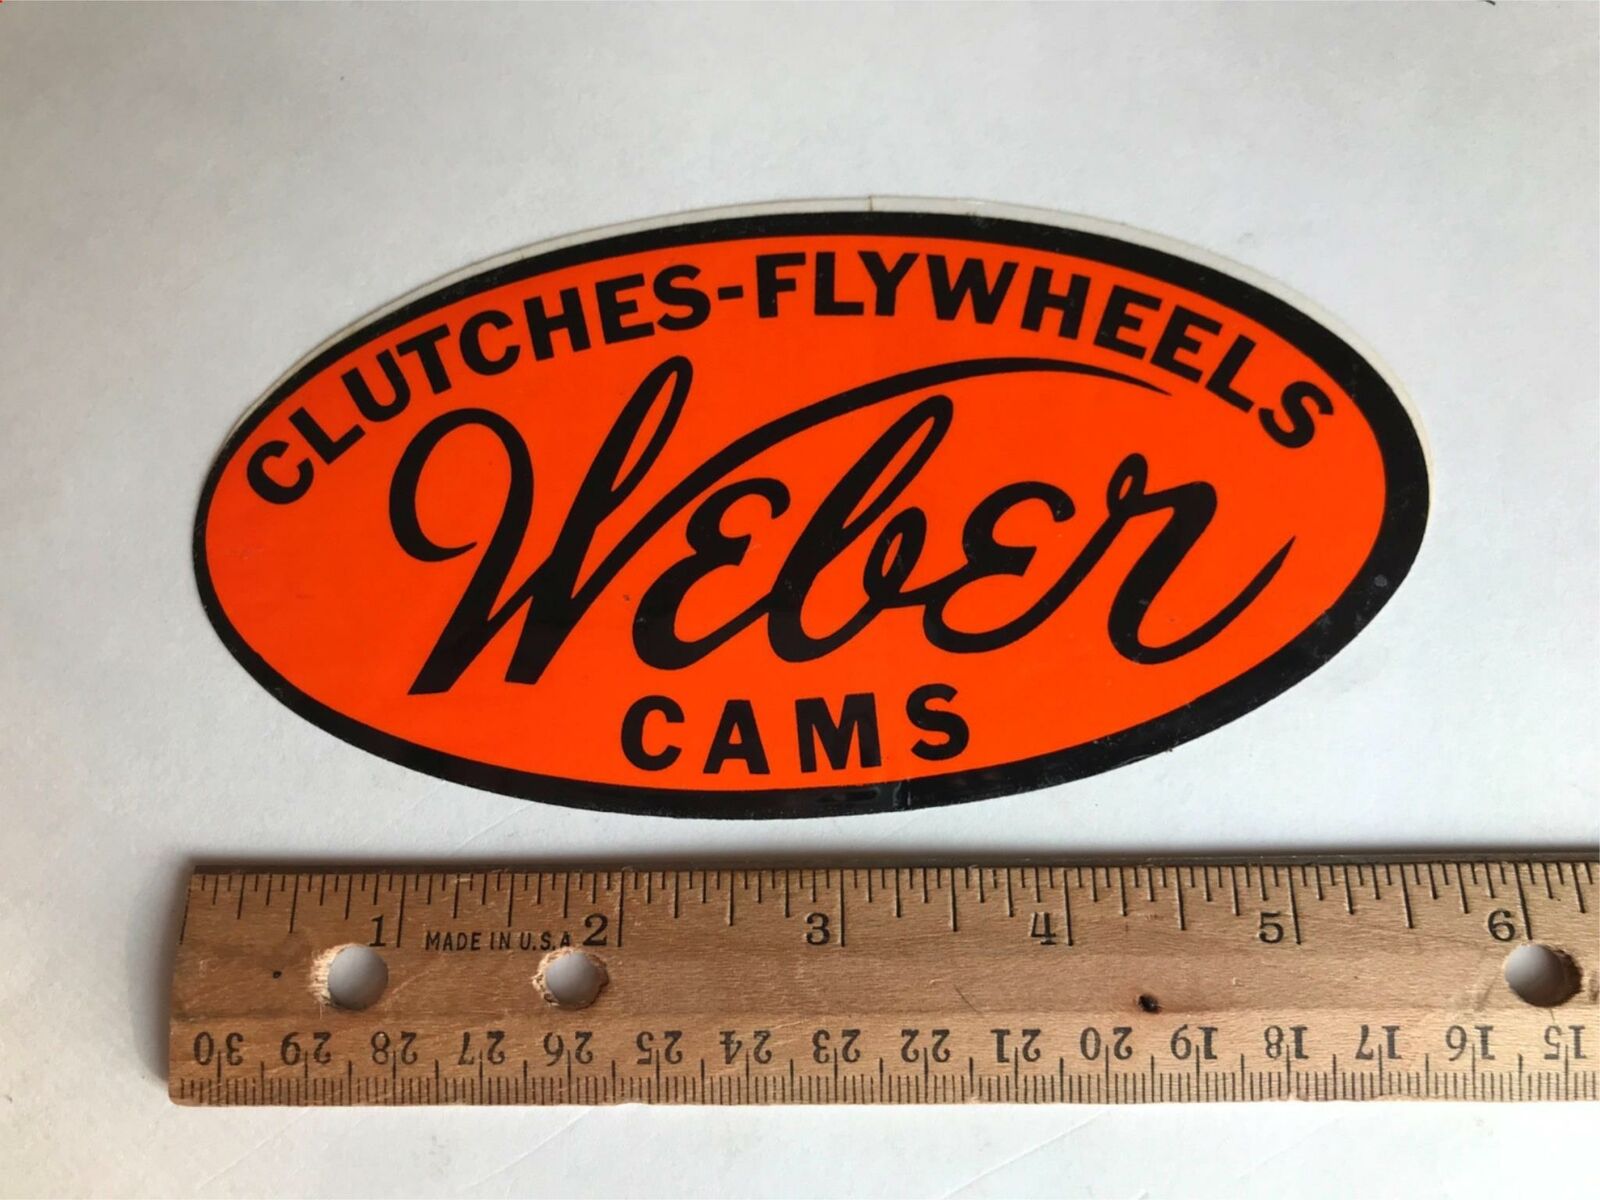 Original vtg 1970s Weber cams clutches flywheels drag racing vinyl decal rare